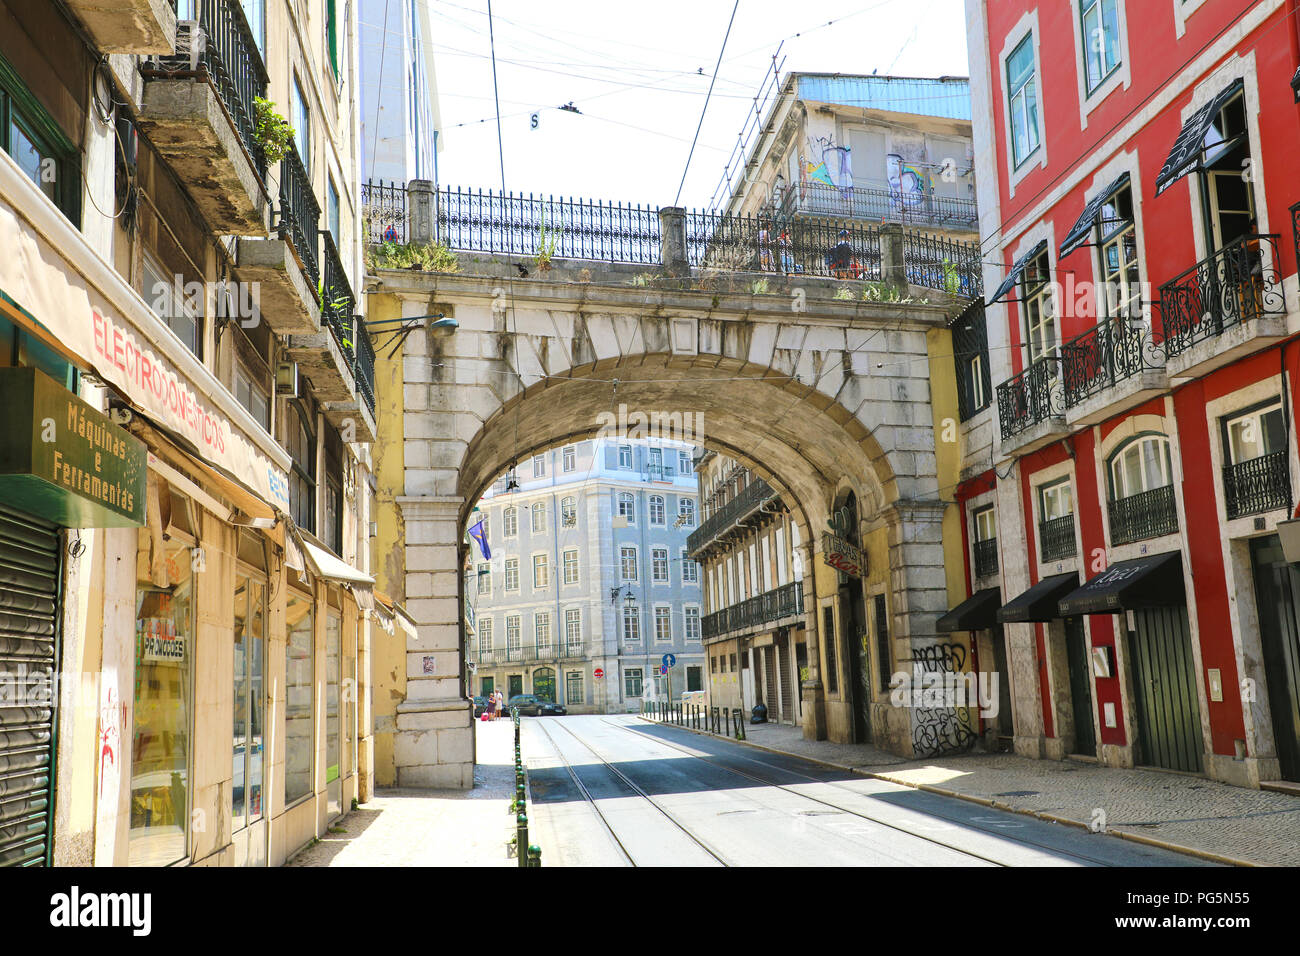 LISBON, PORTUGAL - JUNE 24, 2018: rua de S. Paulo street with viaduct gate way with tramline, Lisbon, Portugal Stock Photo